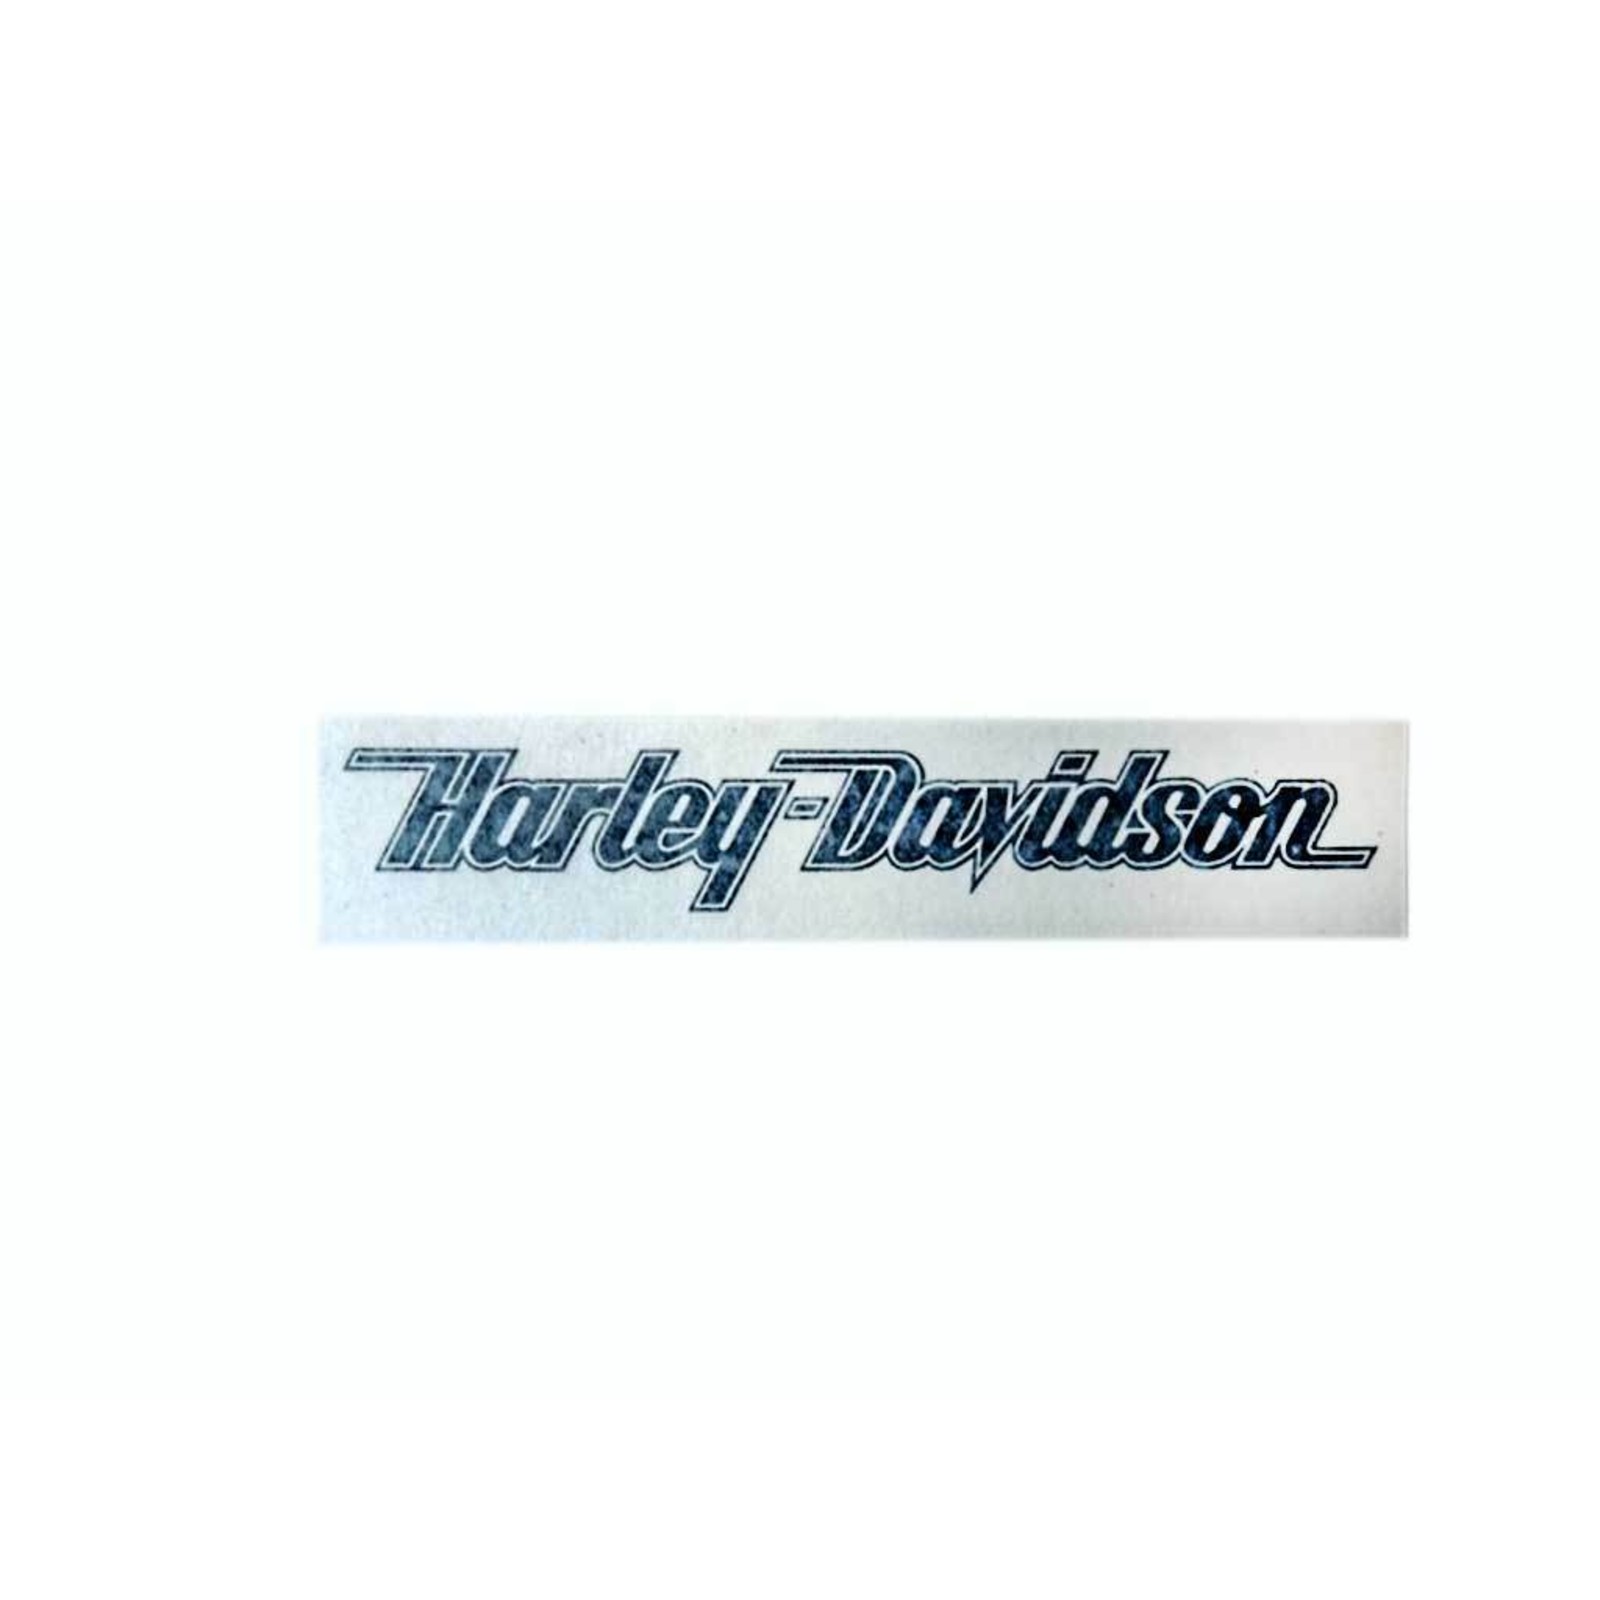 Harley-Davidson original tank sticker decal *14059-84*